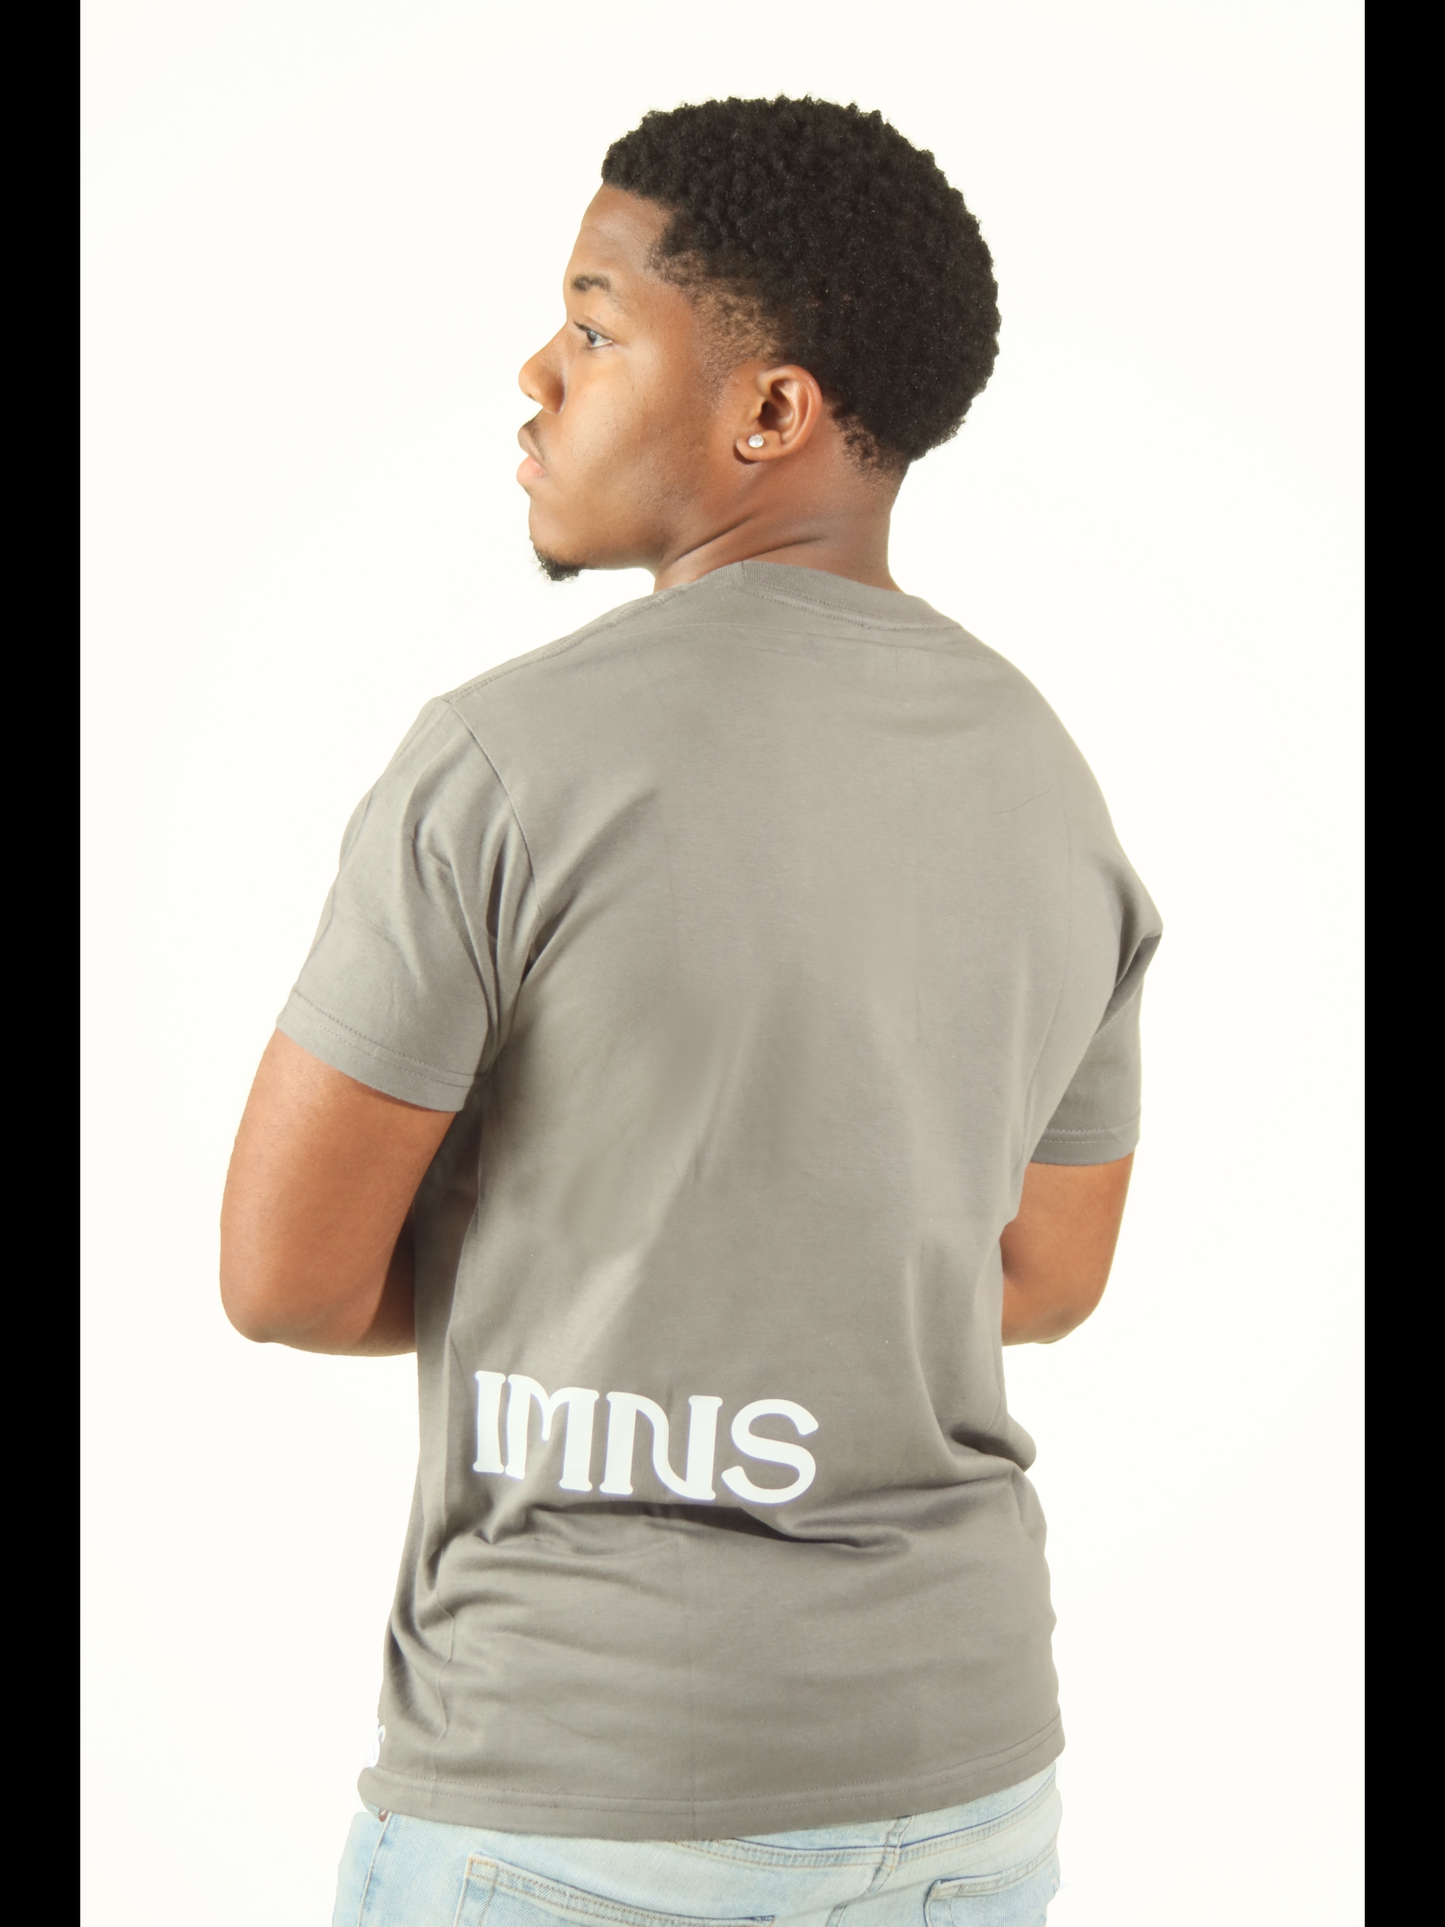 IMMENSE T-Shirt (Unisex)